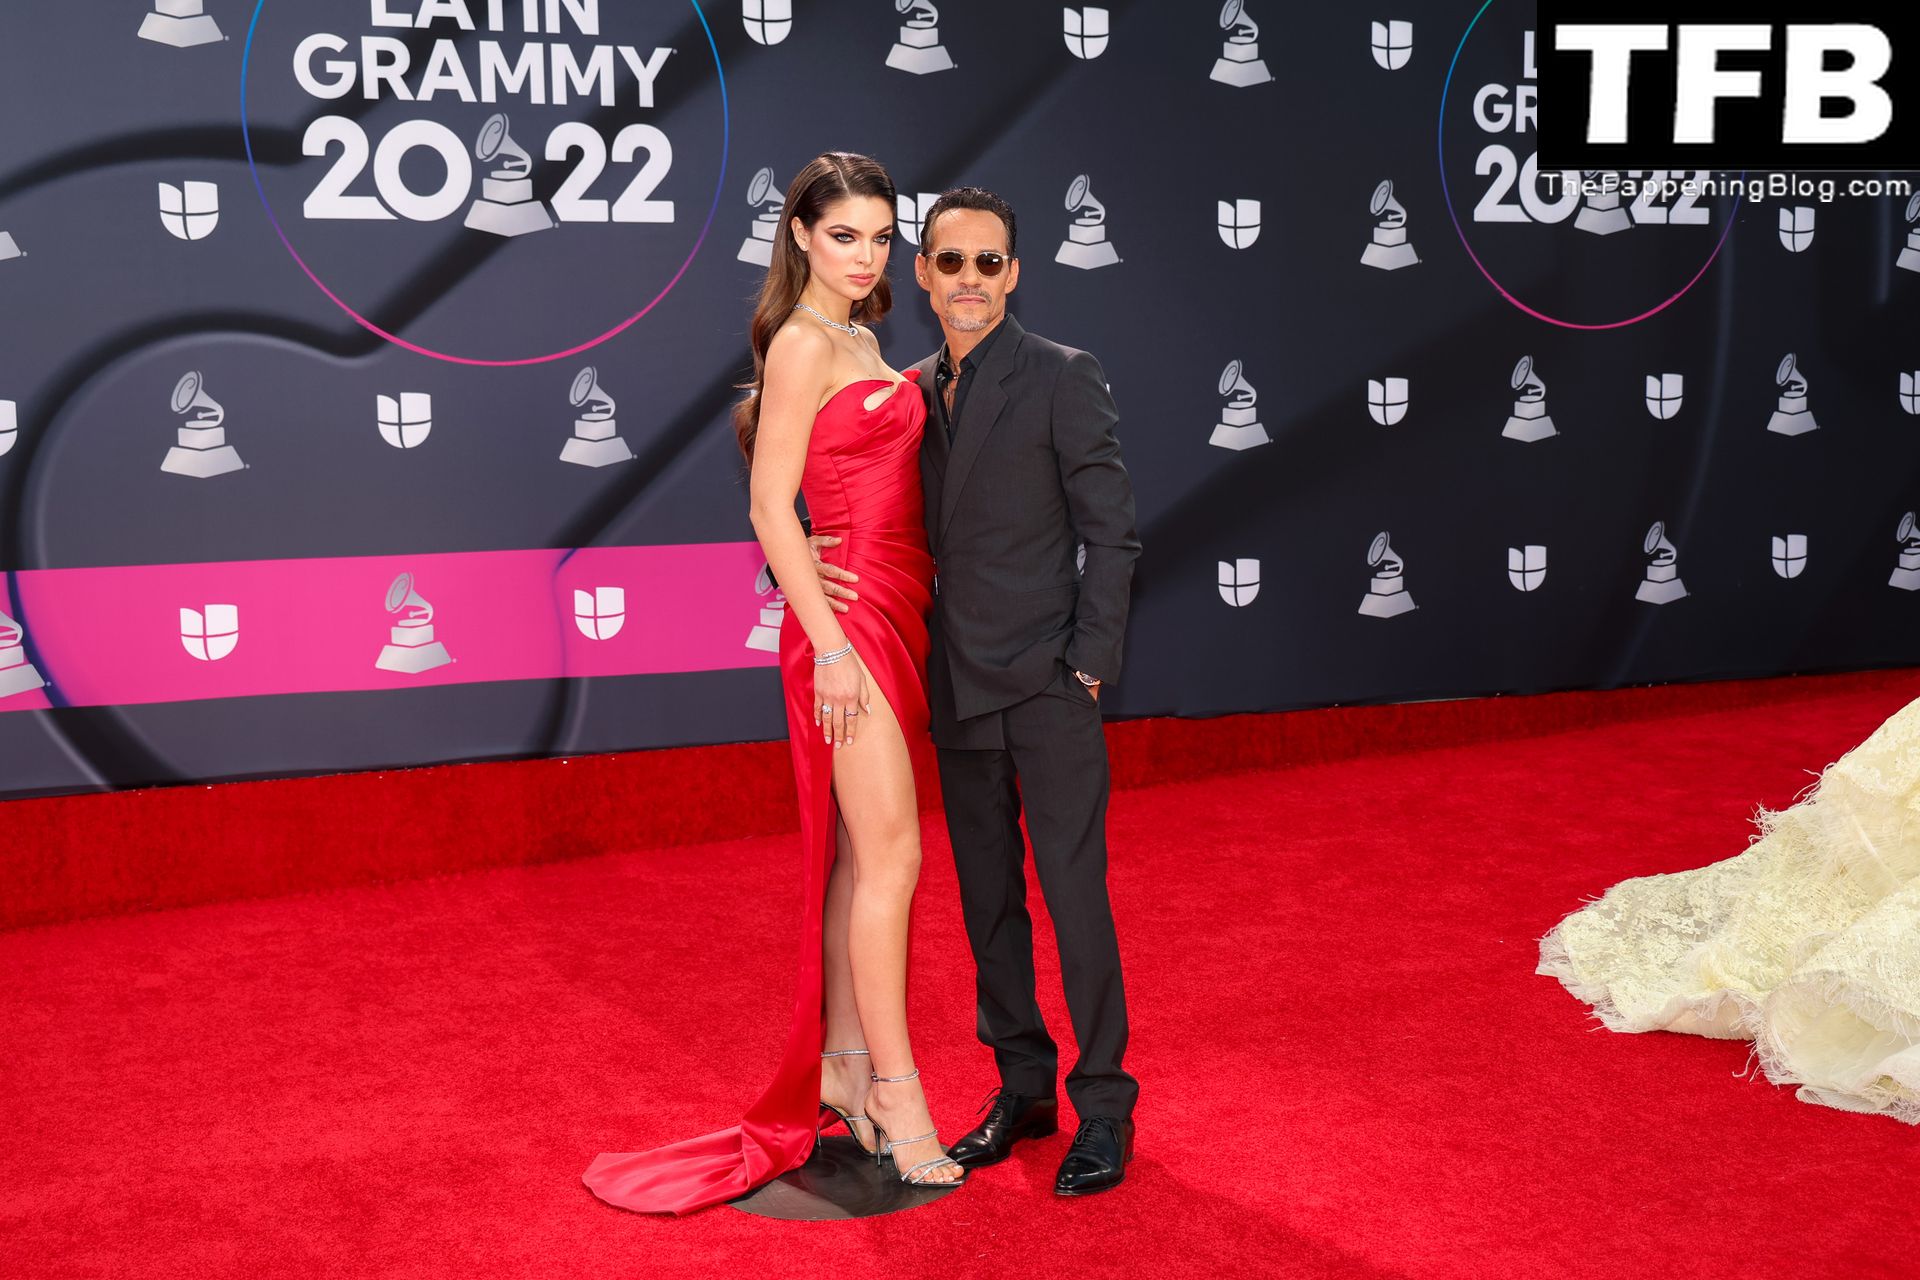 Nadia Ferreira Displays Her Beautiful Legs at the 23rd Annual Latin Grammy Awards (9 Photos)